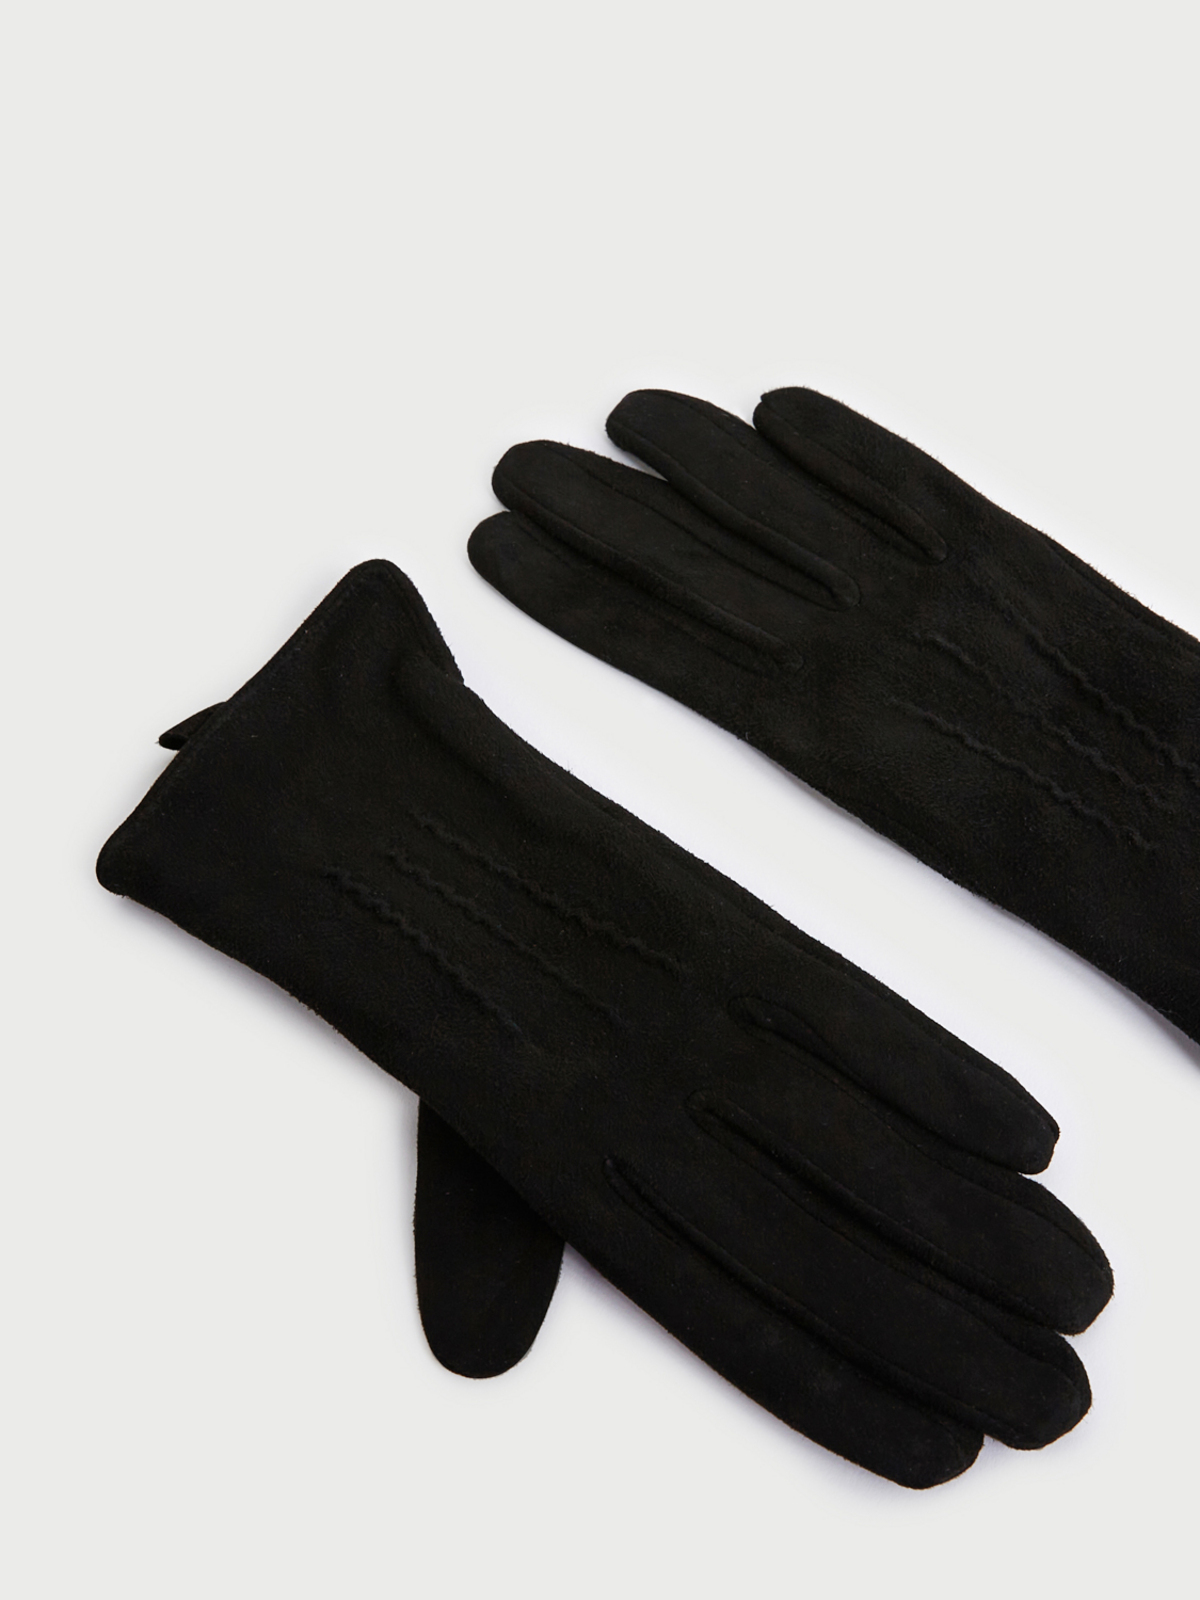 Esprit gants noir femme